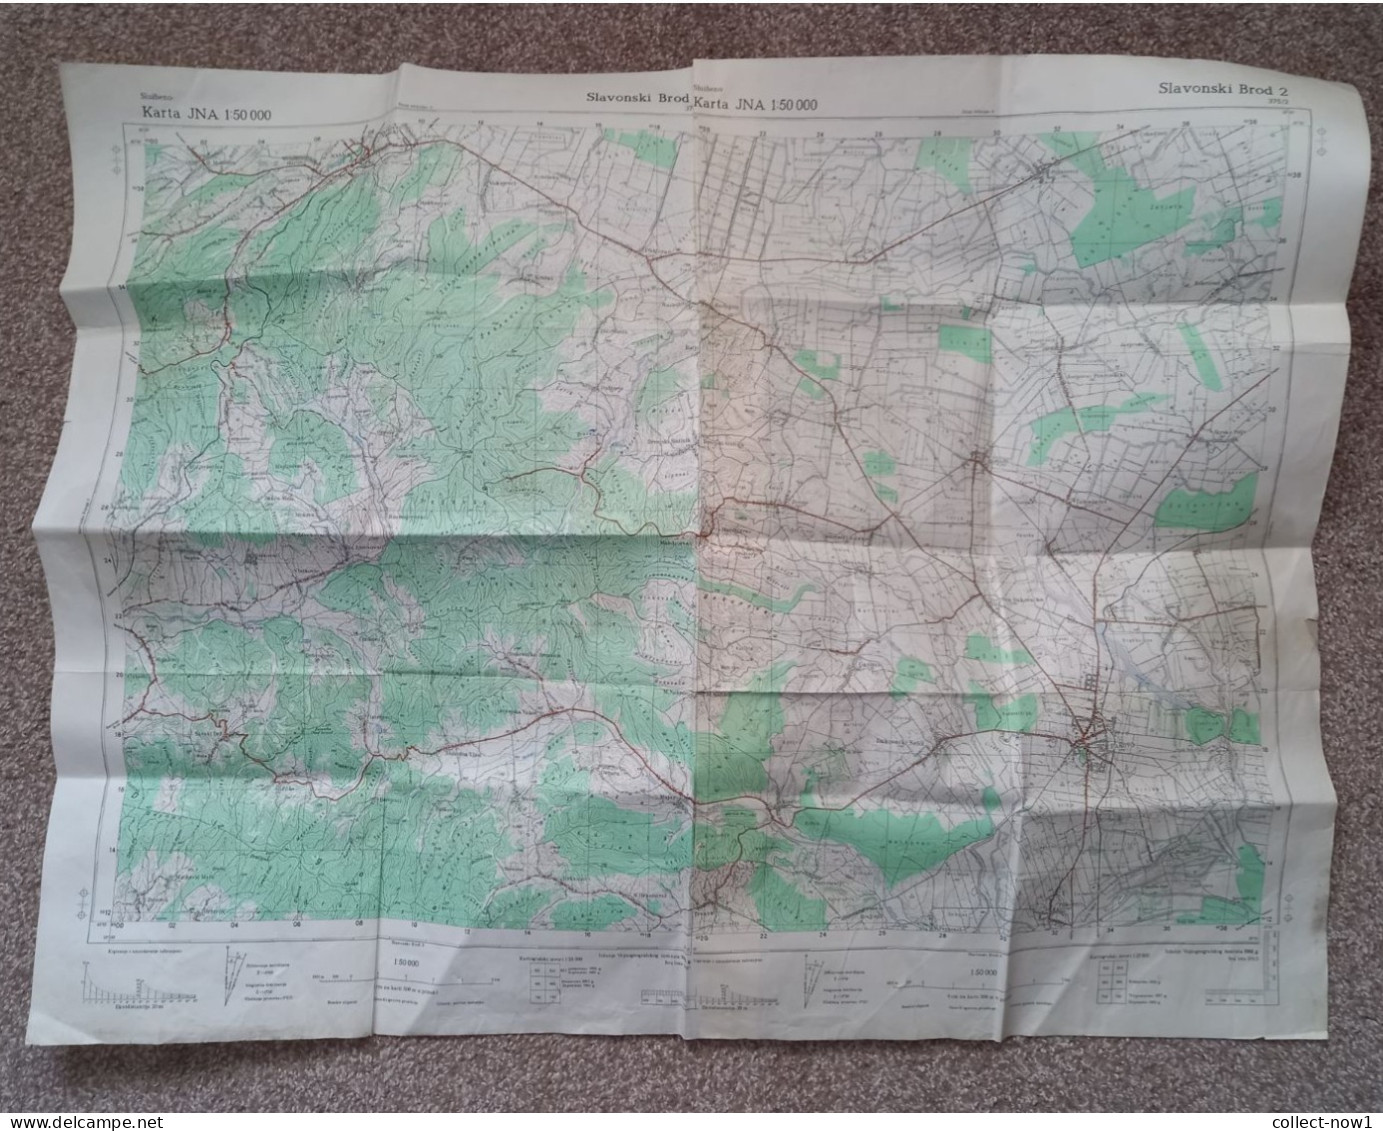 Topographical Maps - Croatia / Slavonski Brod - JNA YUGOSLAVIA ARMY MAP MILITARY CHART PLAN - Cartes Topographiques